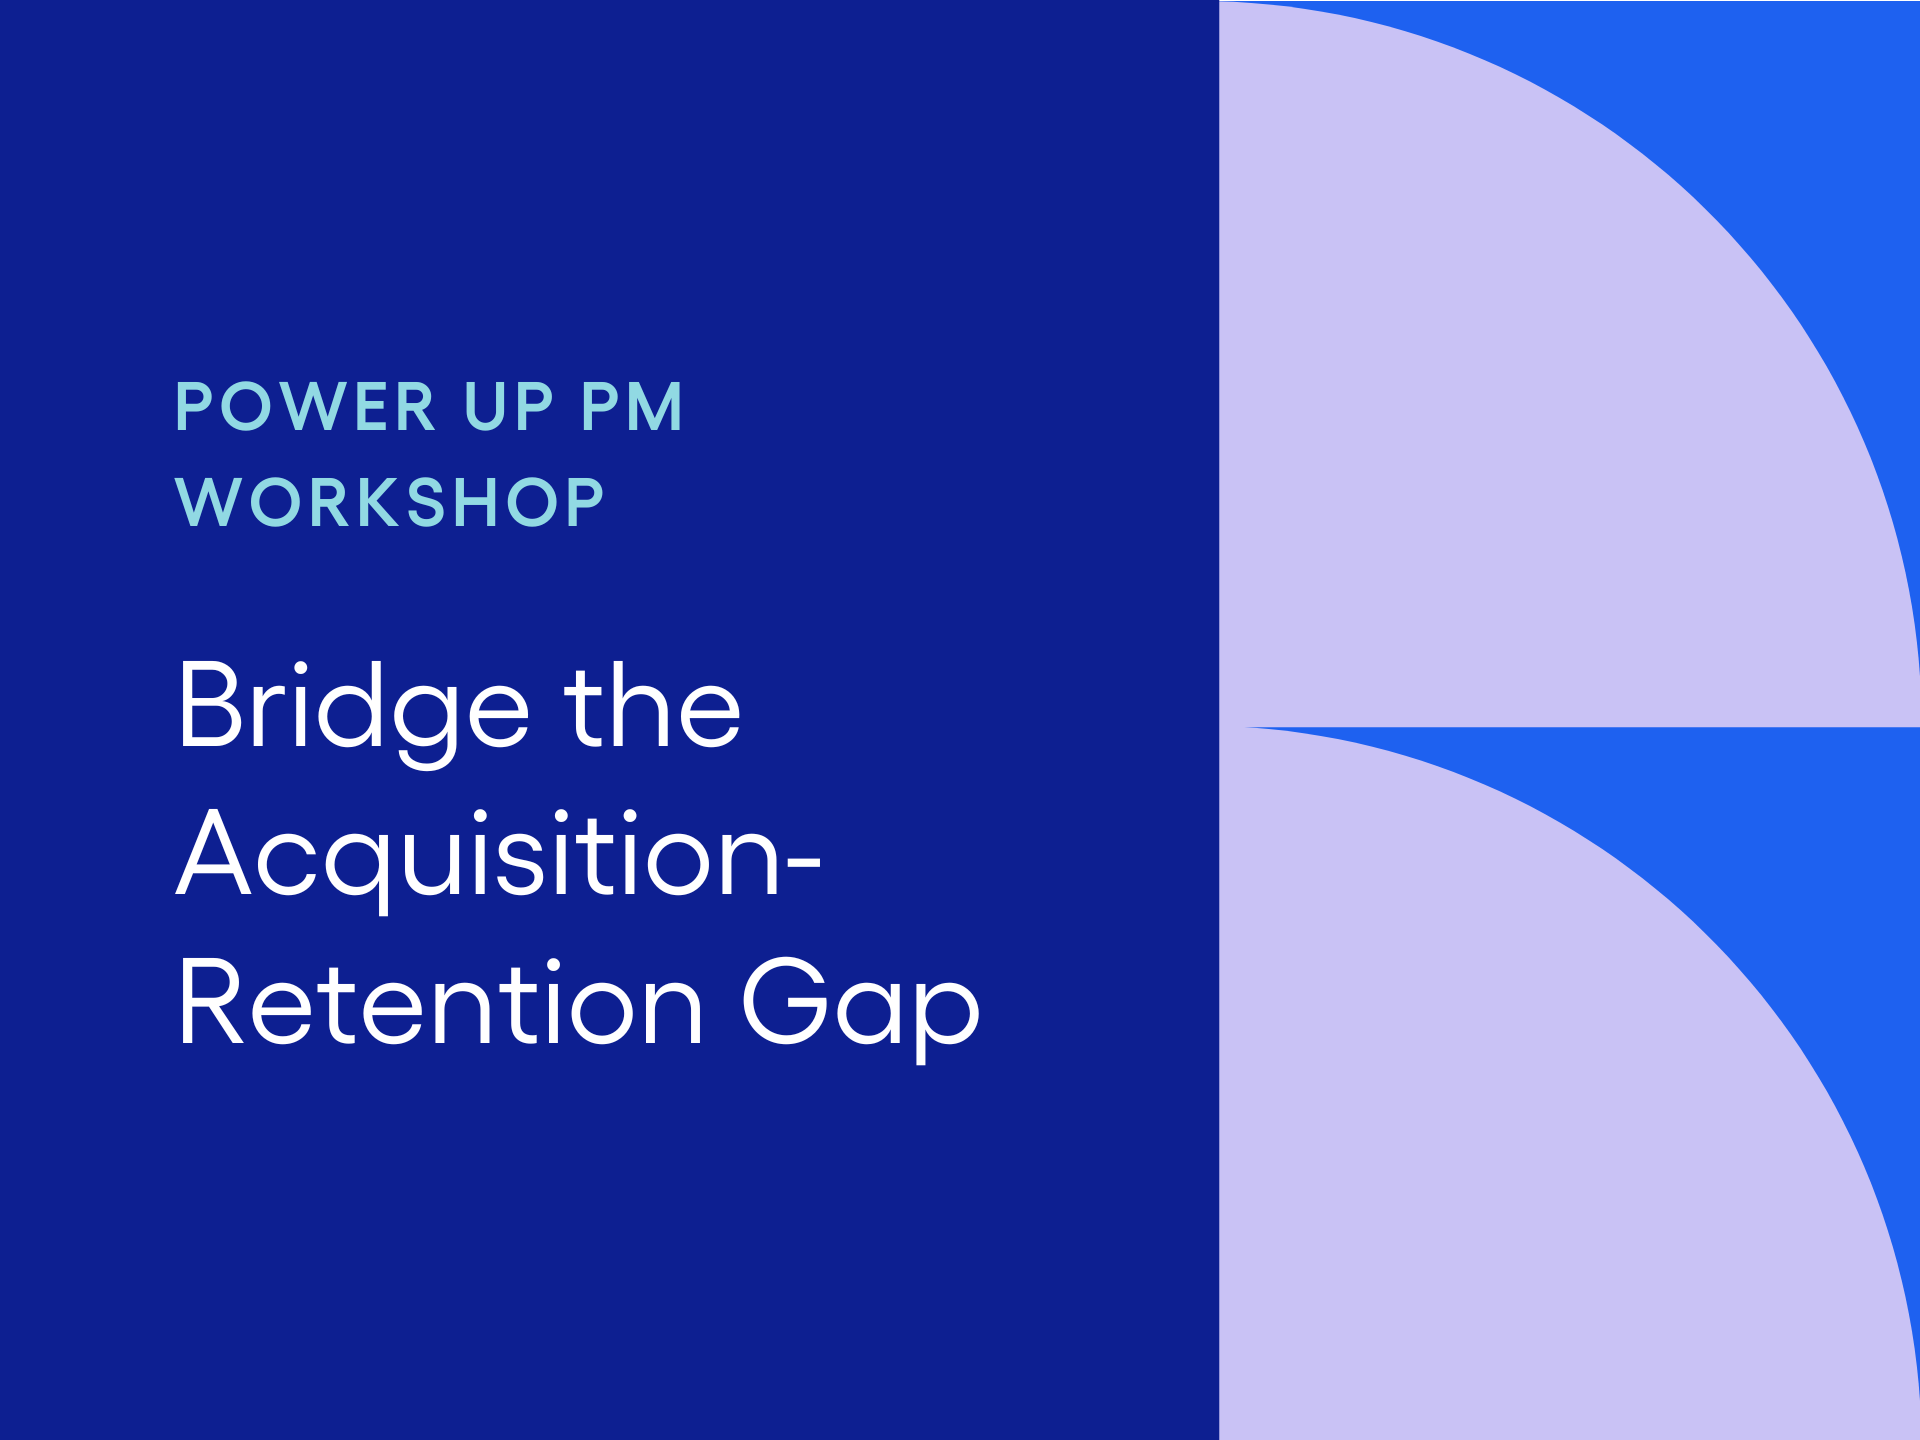 Bridge the Acquisition-Retention Gap using the Activation Framework